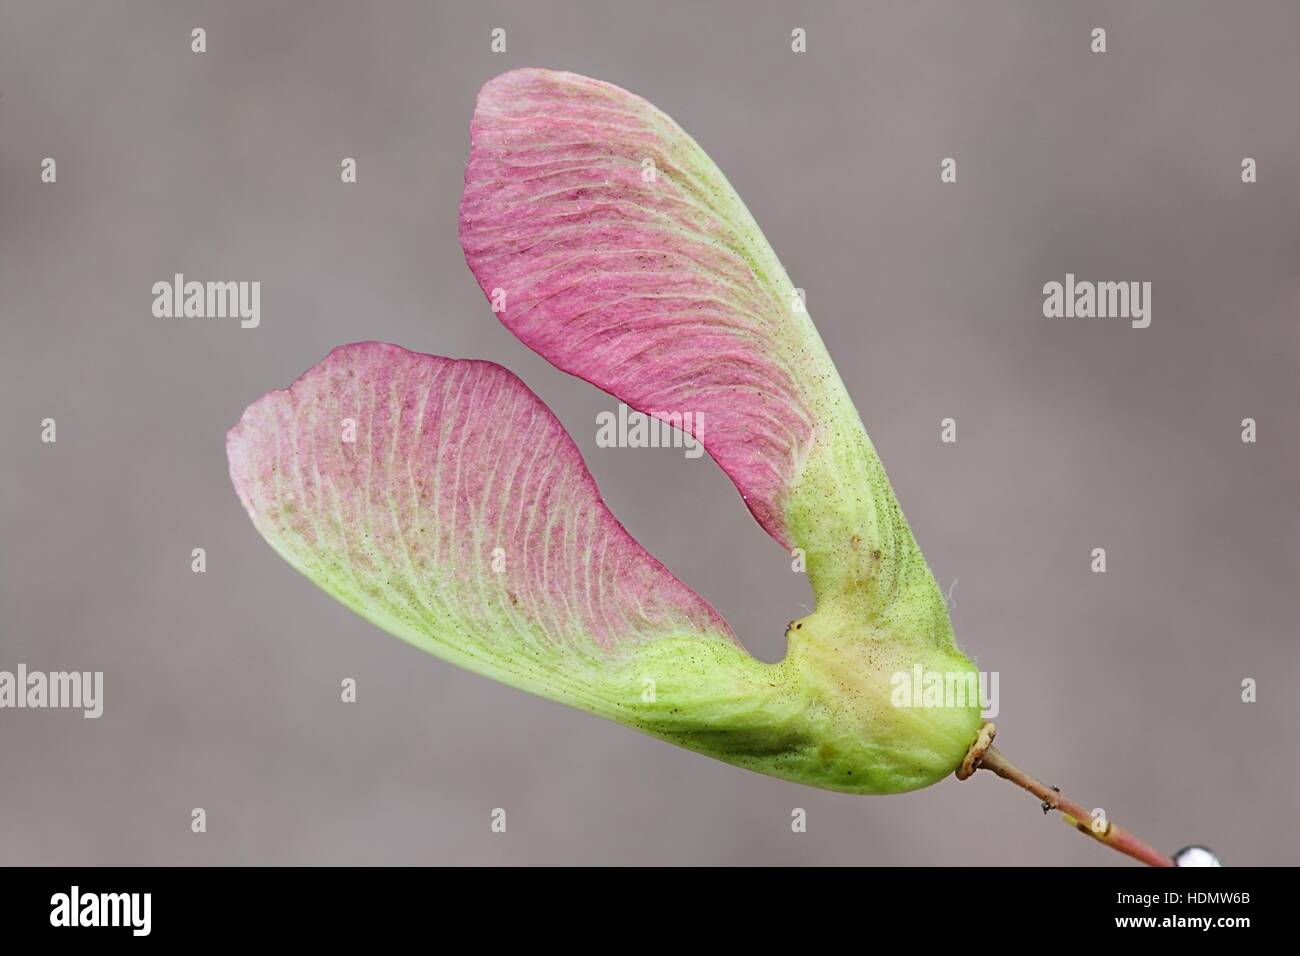 Seed of Amur maple, Acer ginnala Stock Photo